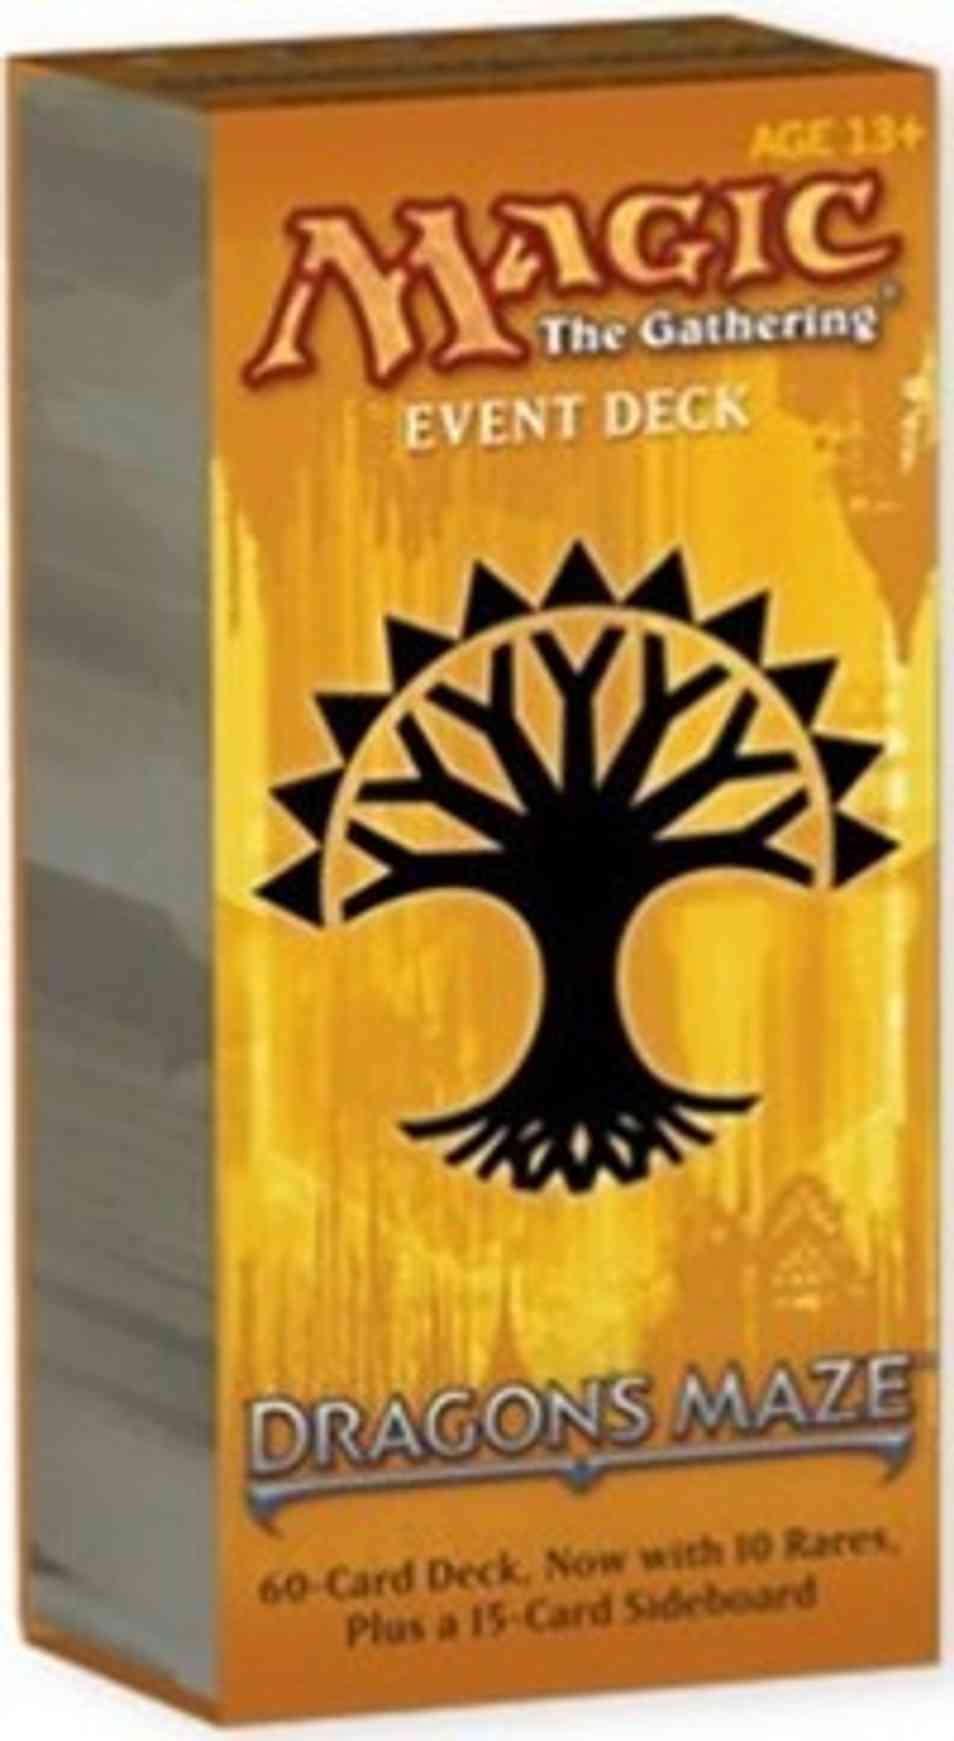 Dragon's Maze - Event Deck magic card front